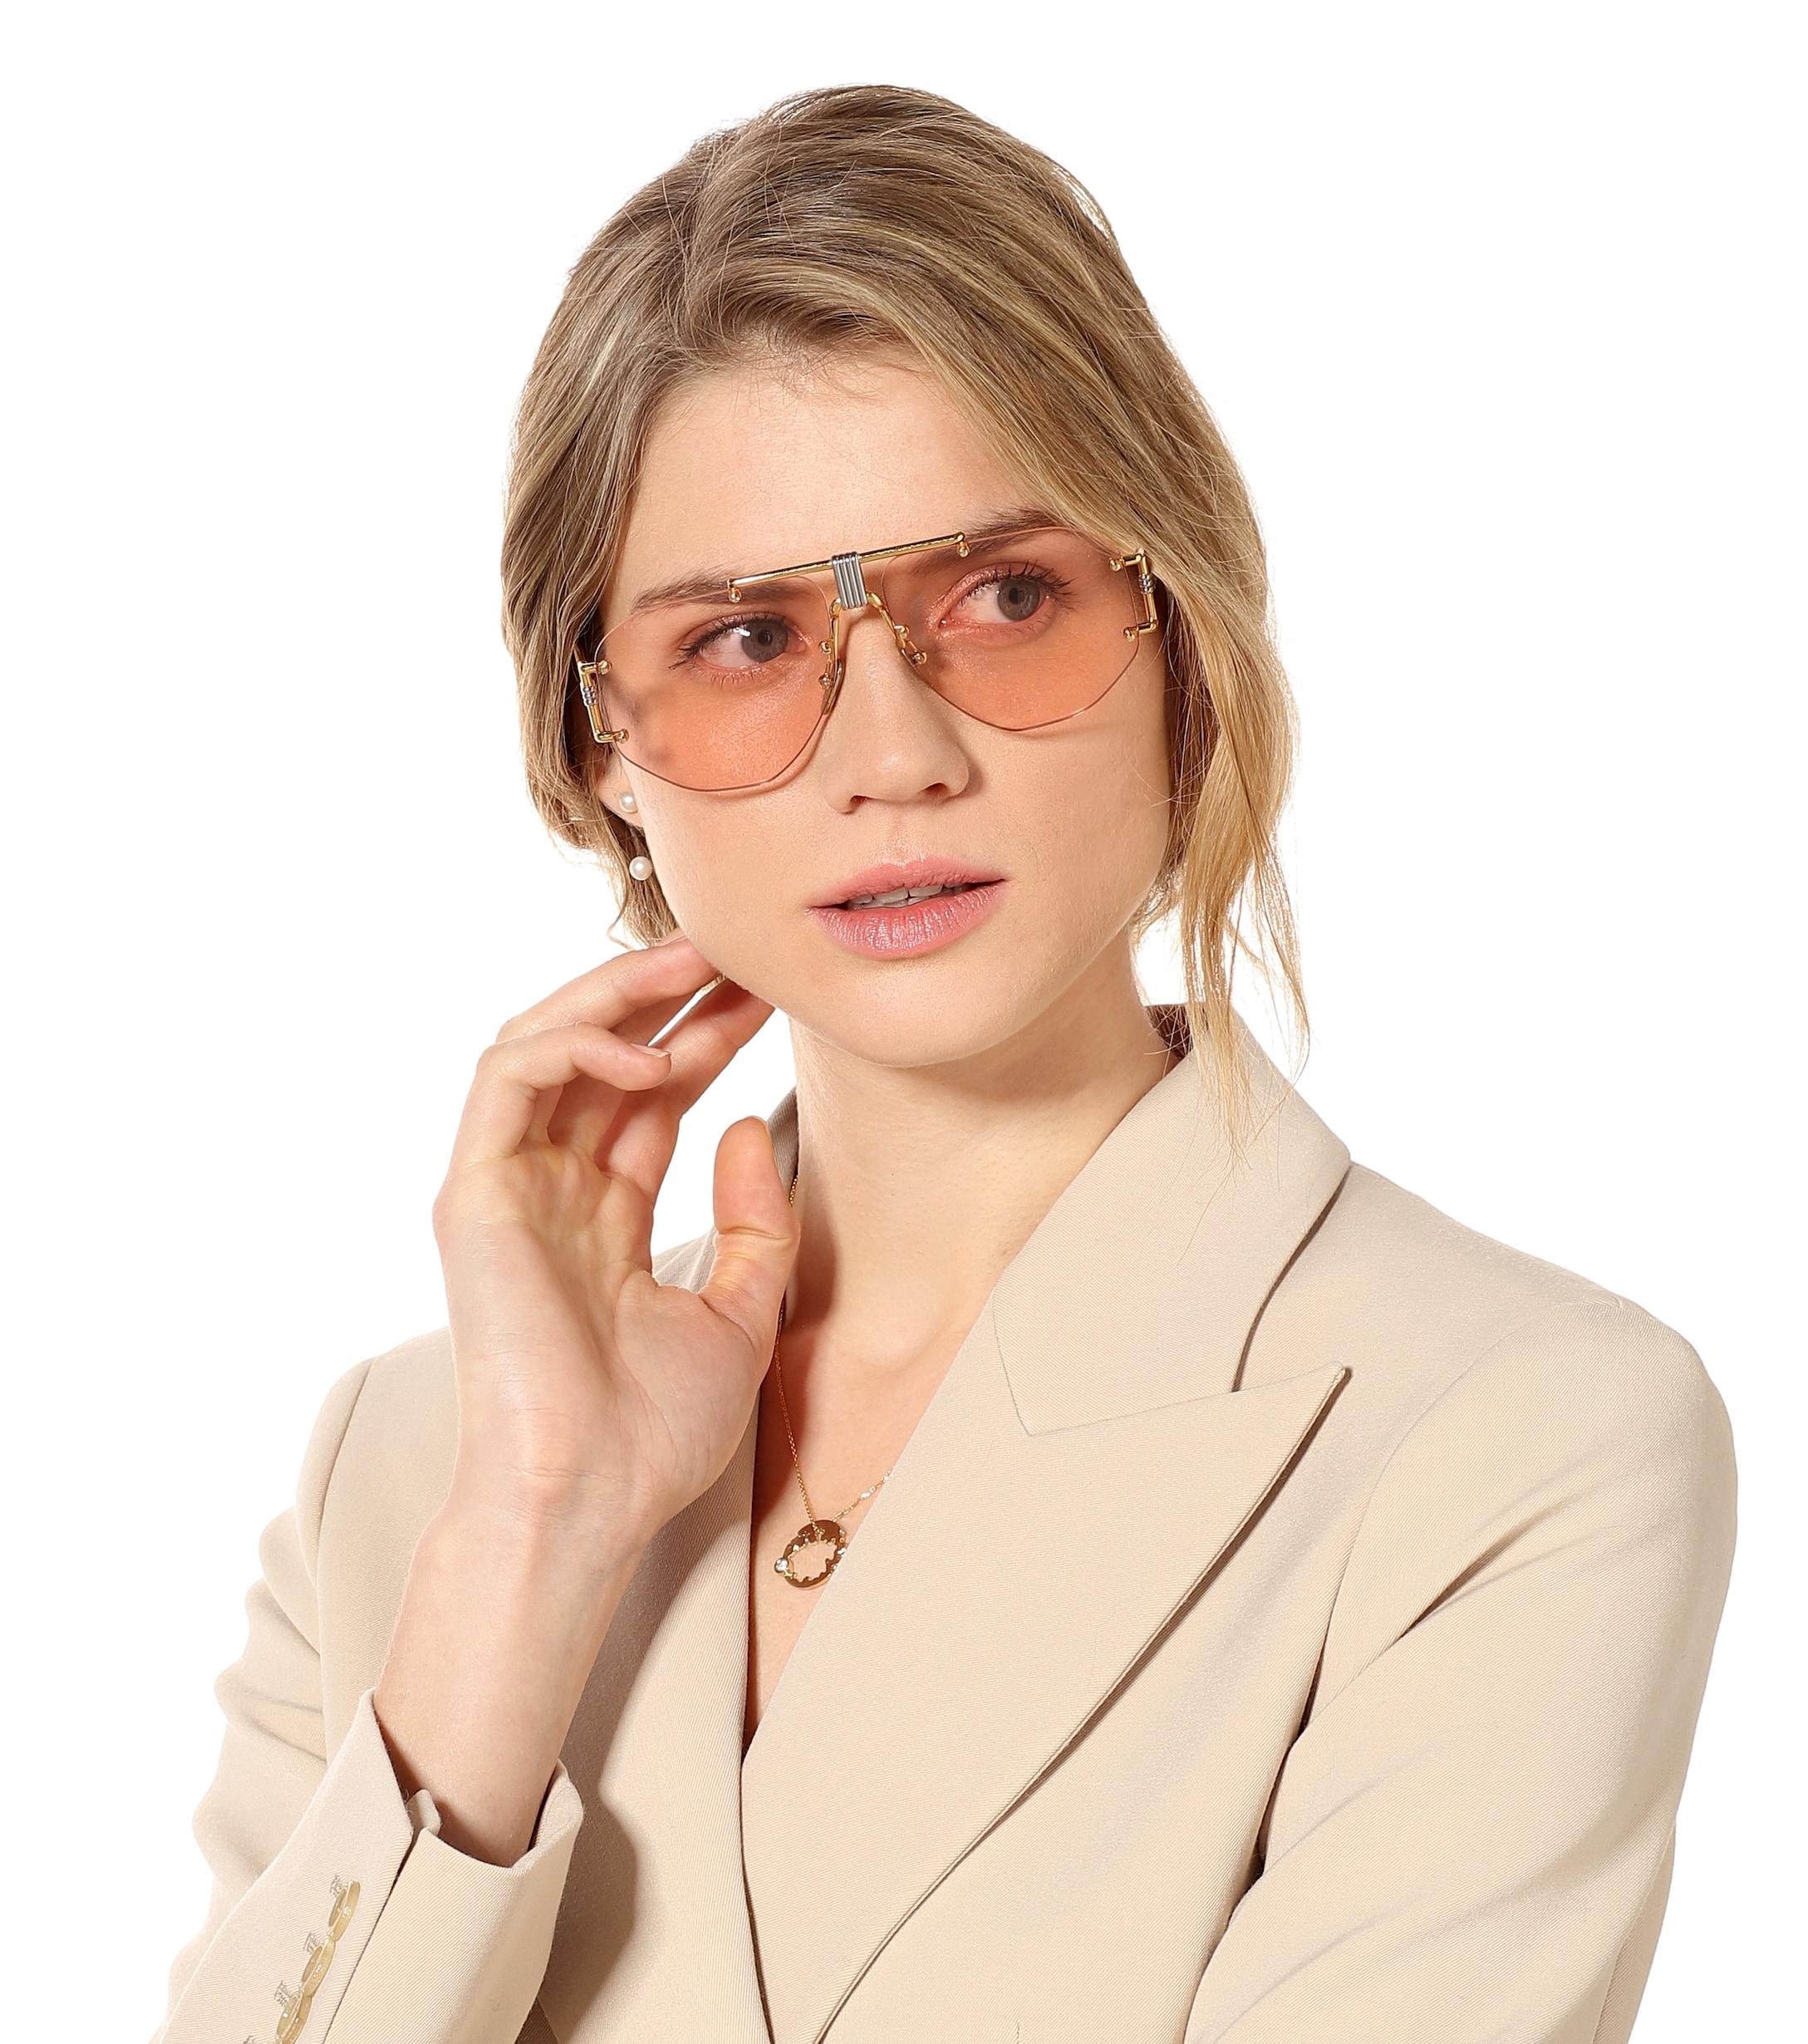 Celine Aviator Sunglasses in Pink | Lyst